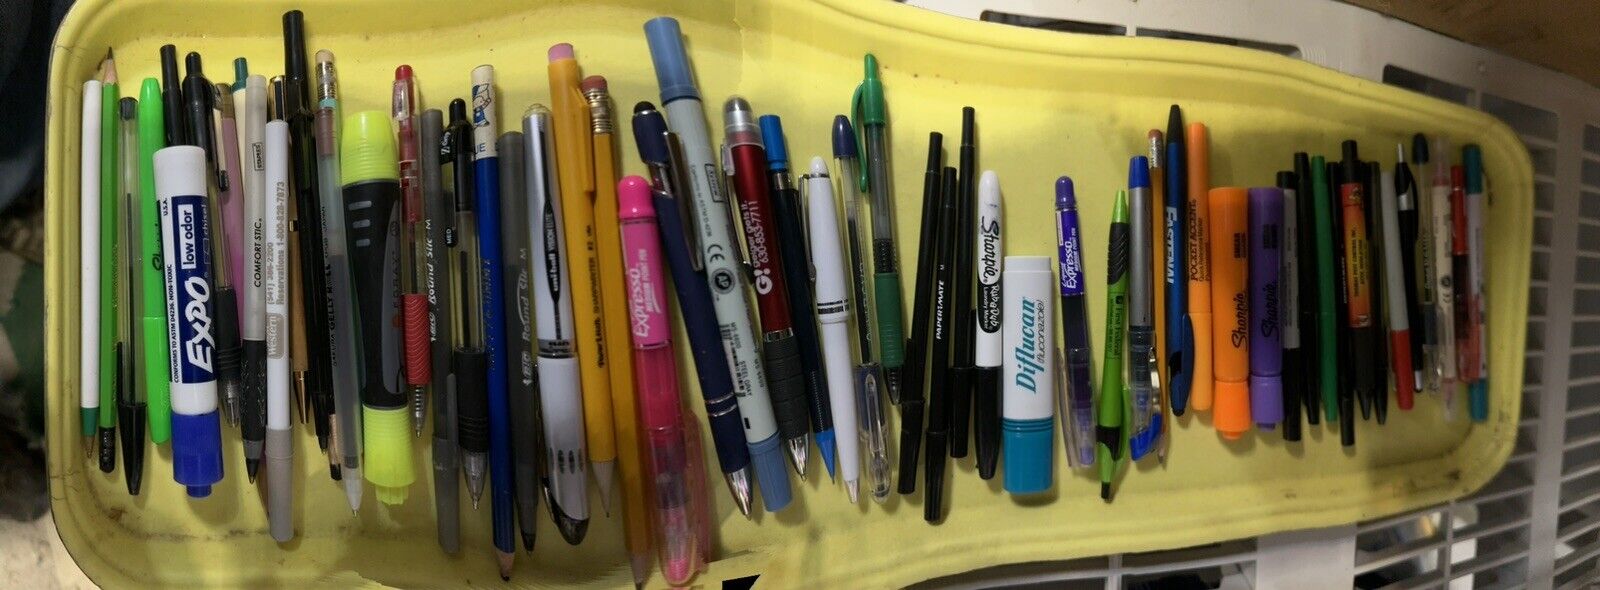 Lot of 45+ ink pens pencils markers Sharpies  Broken Old Common Mix